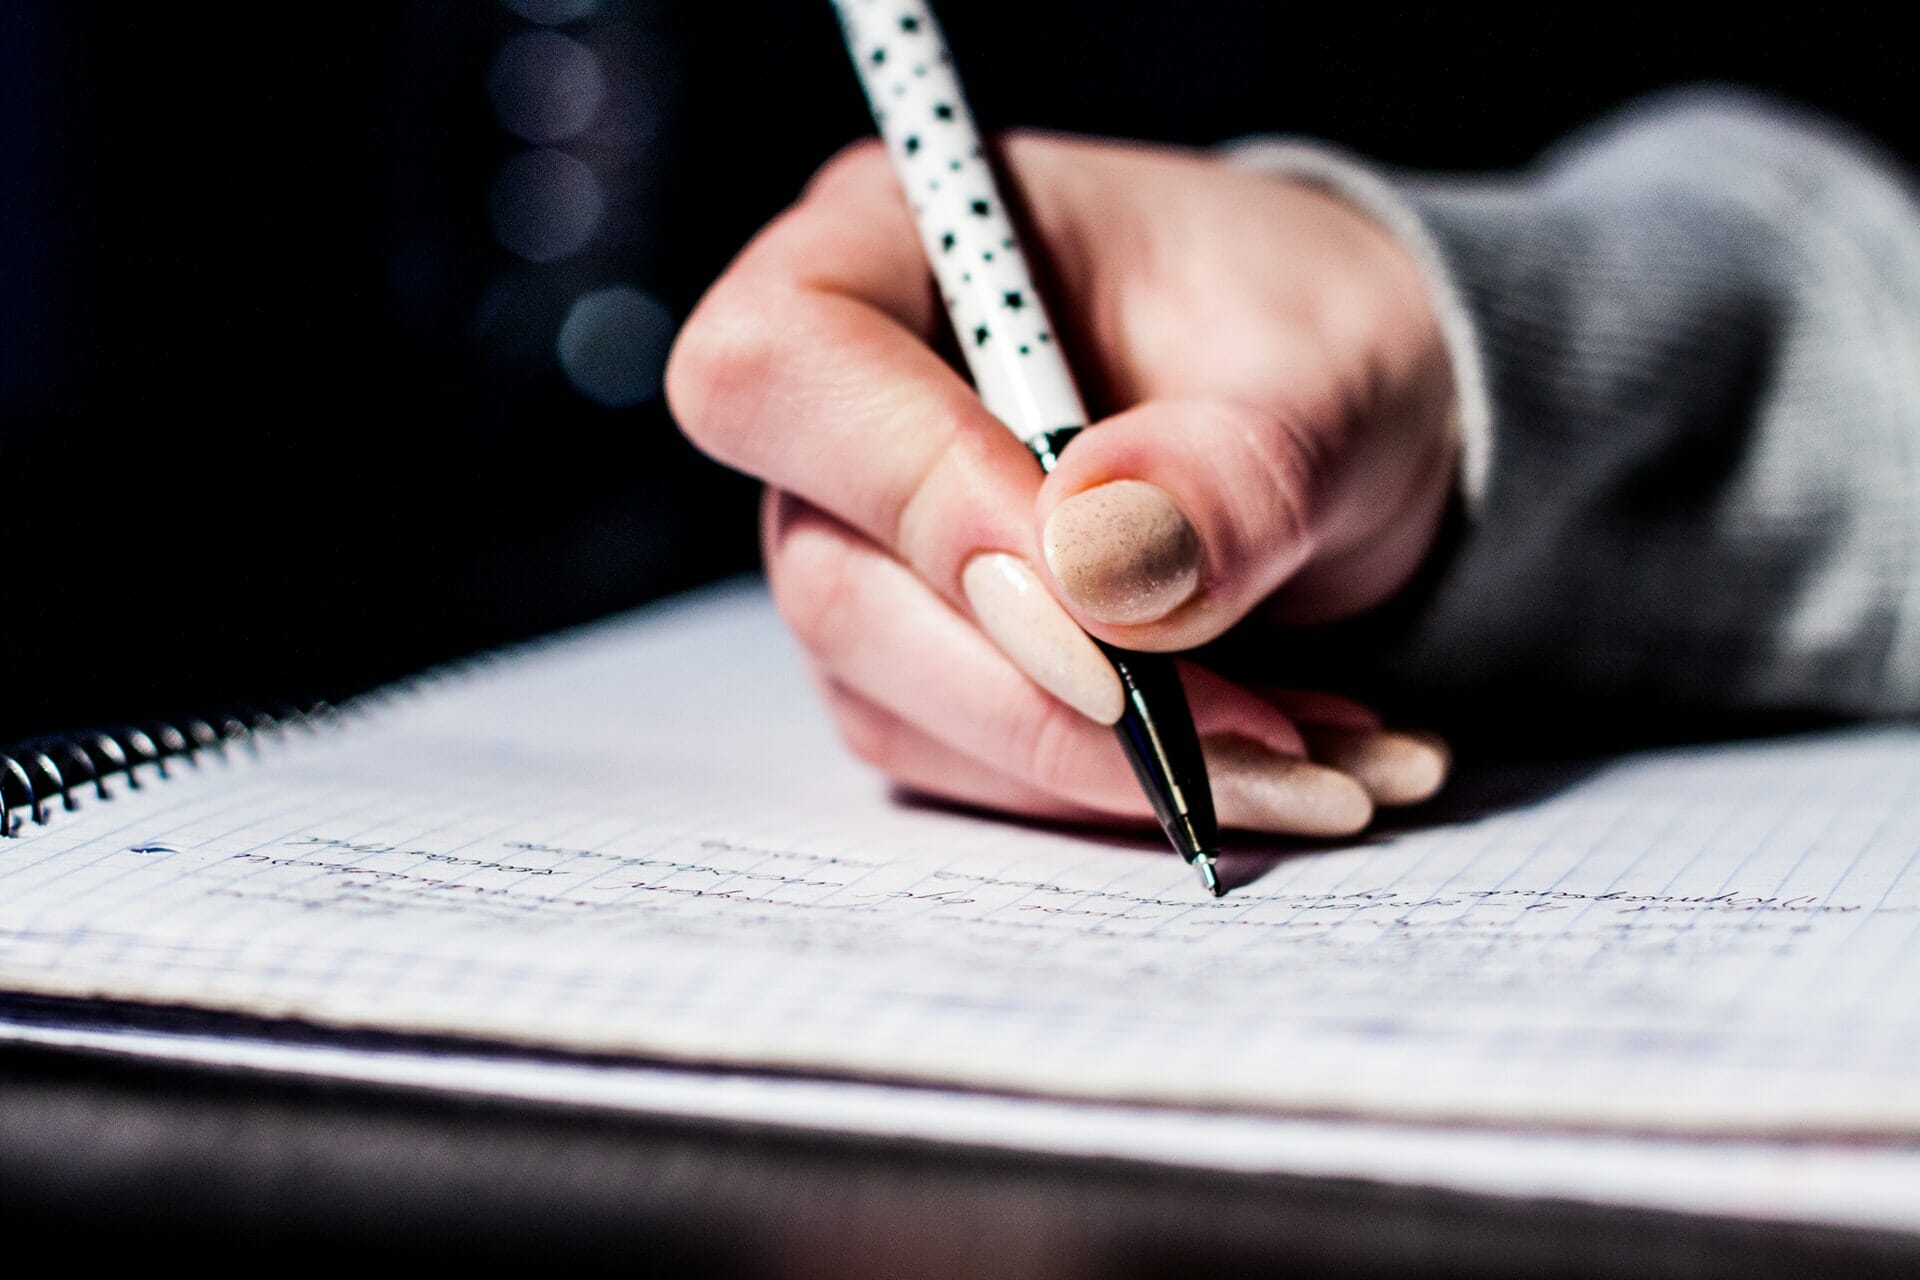 pen writing notes studying classroom hand examination